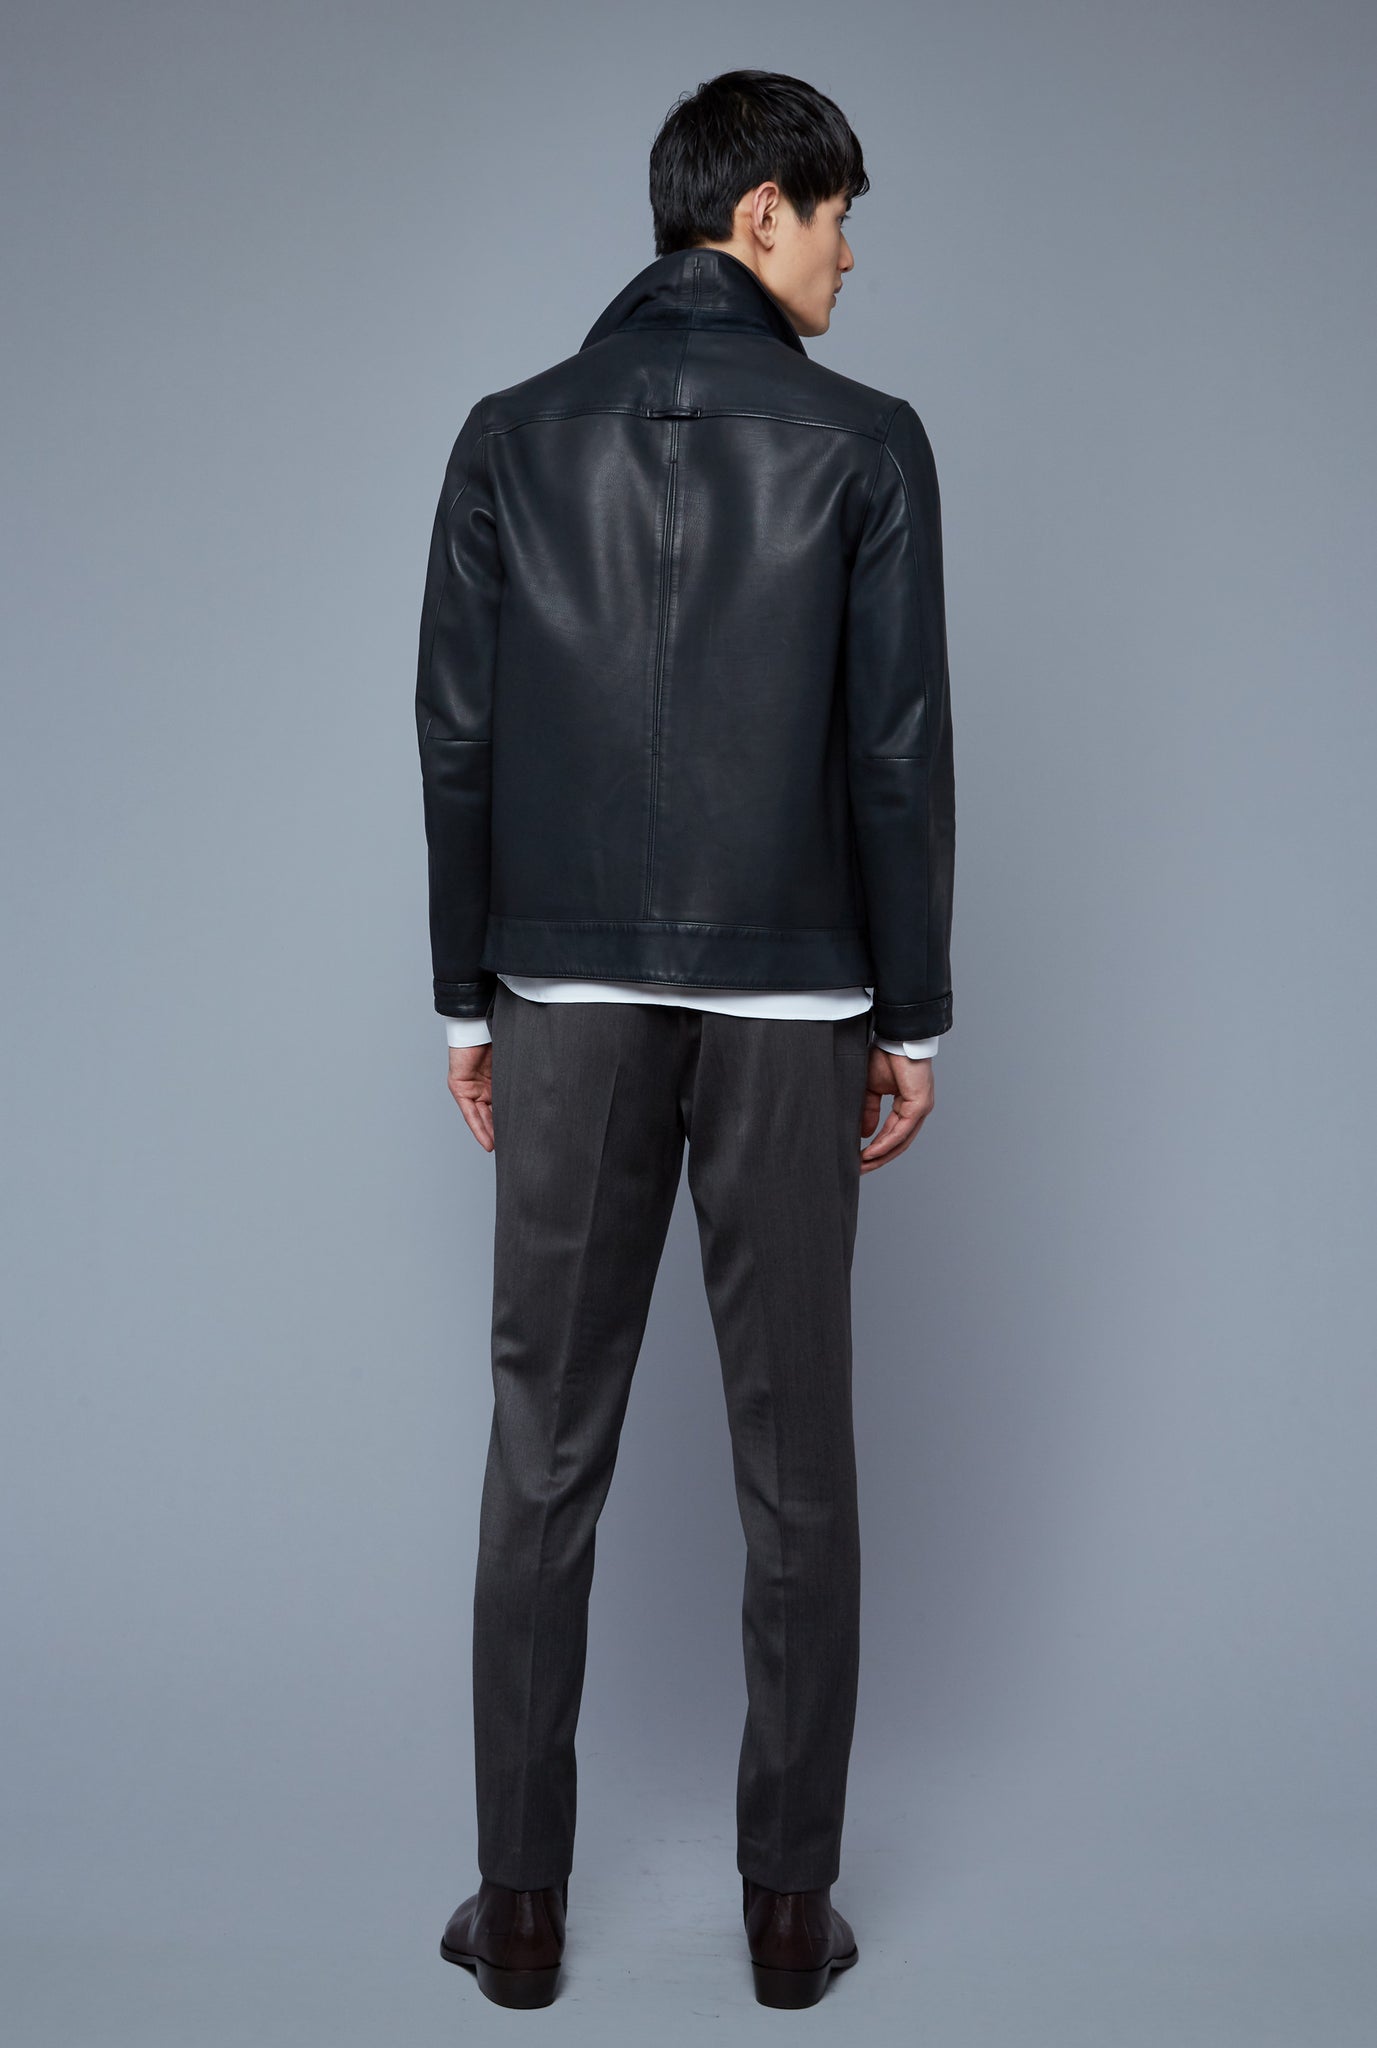 Back View: Model Qiang Li wearing Leather Supple Jacket